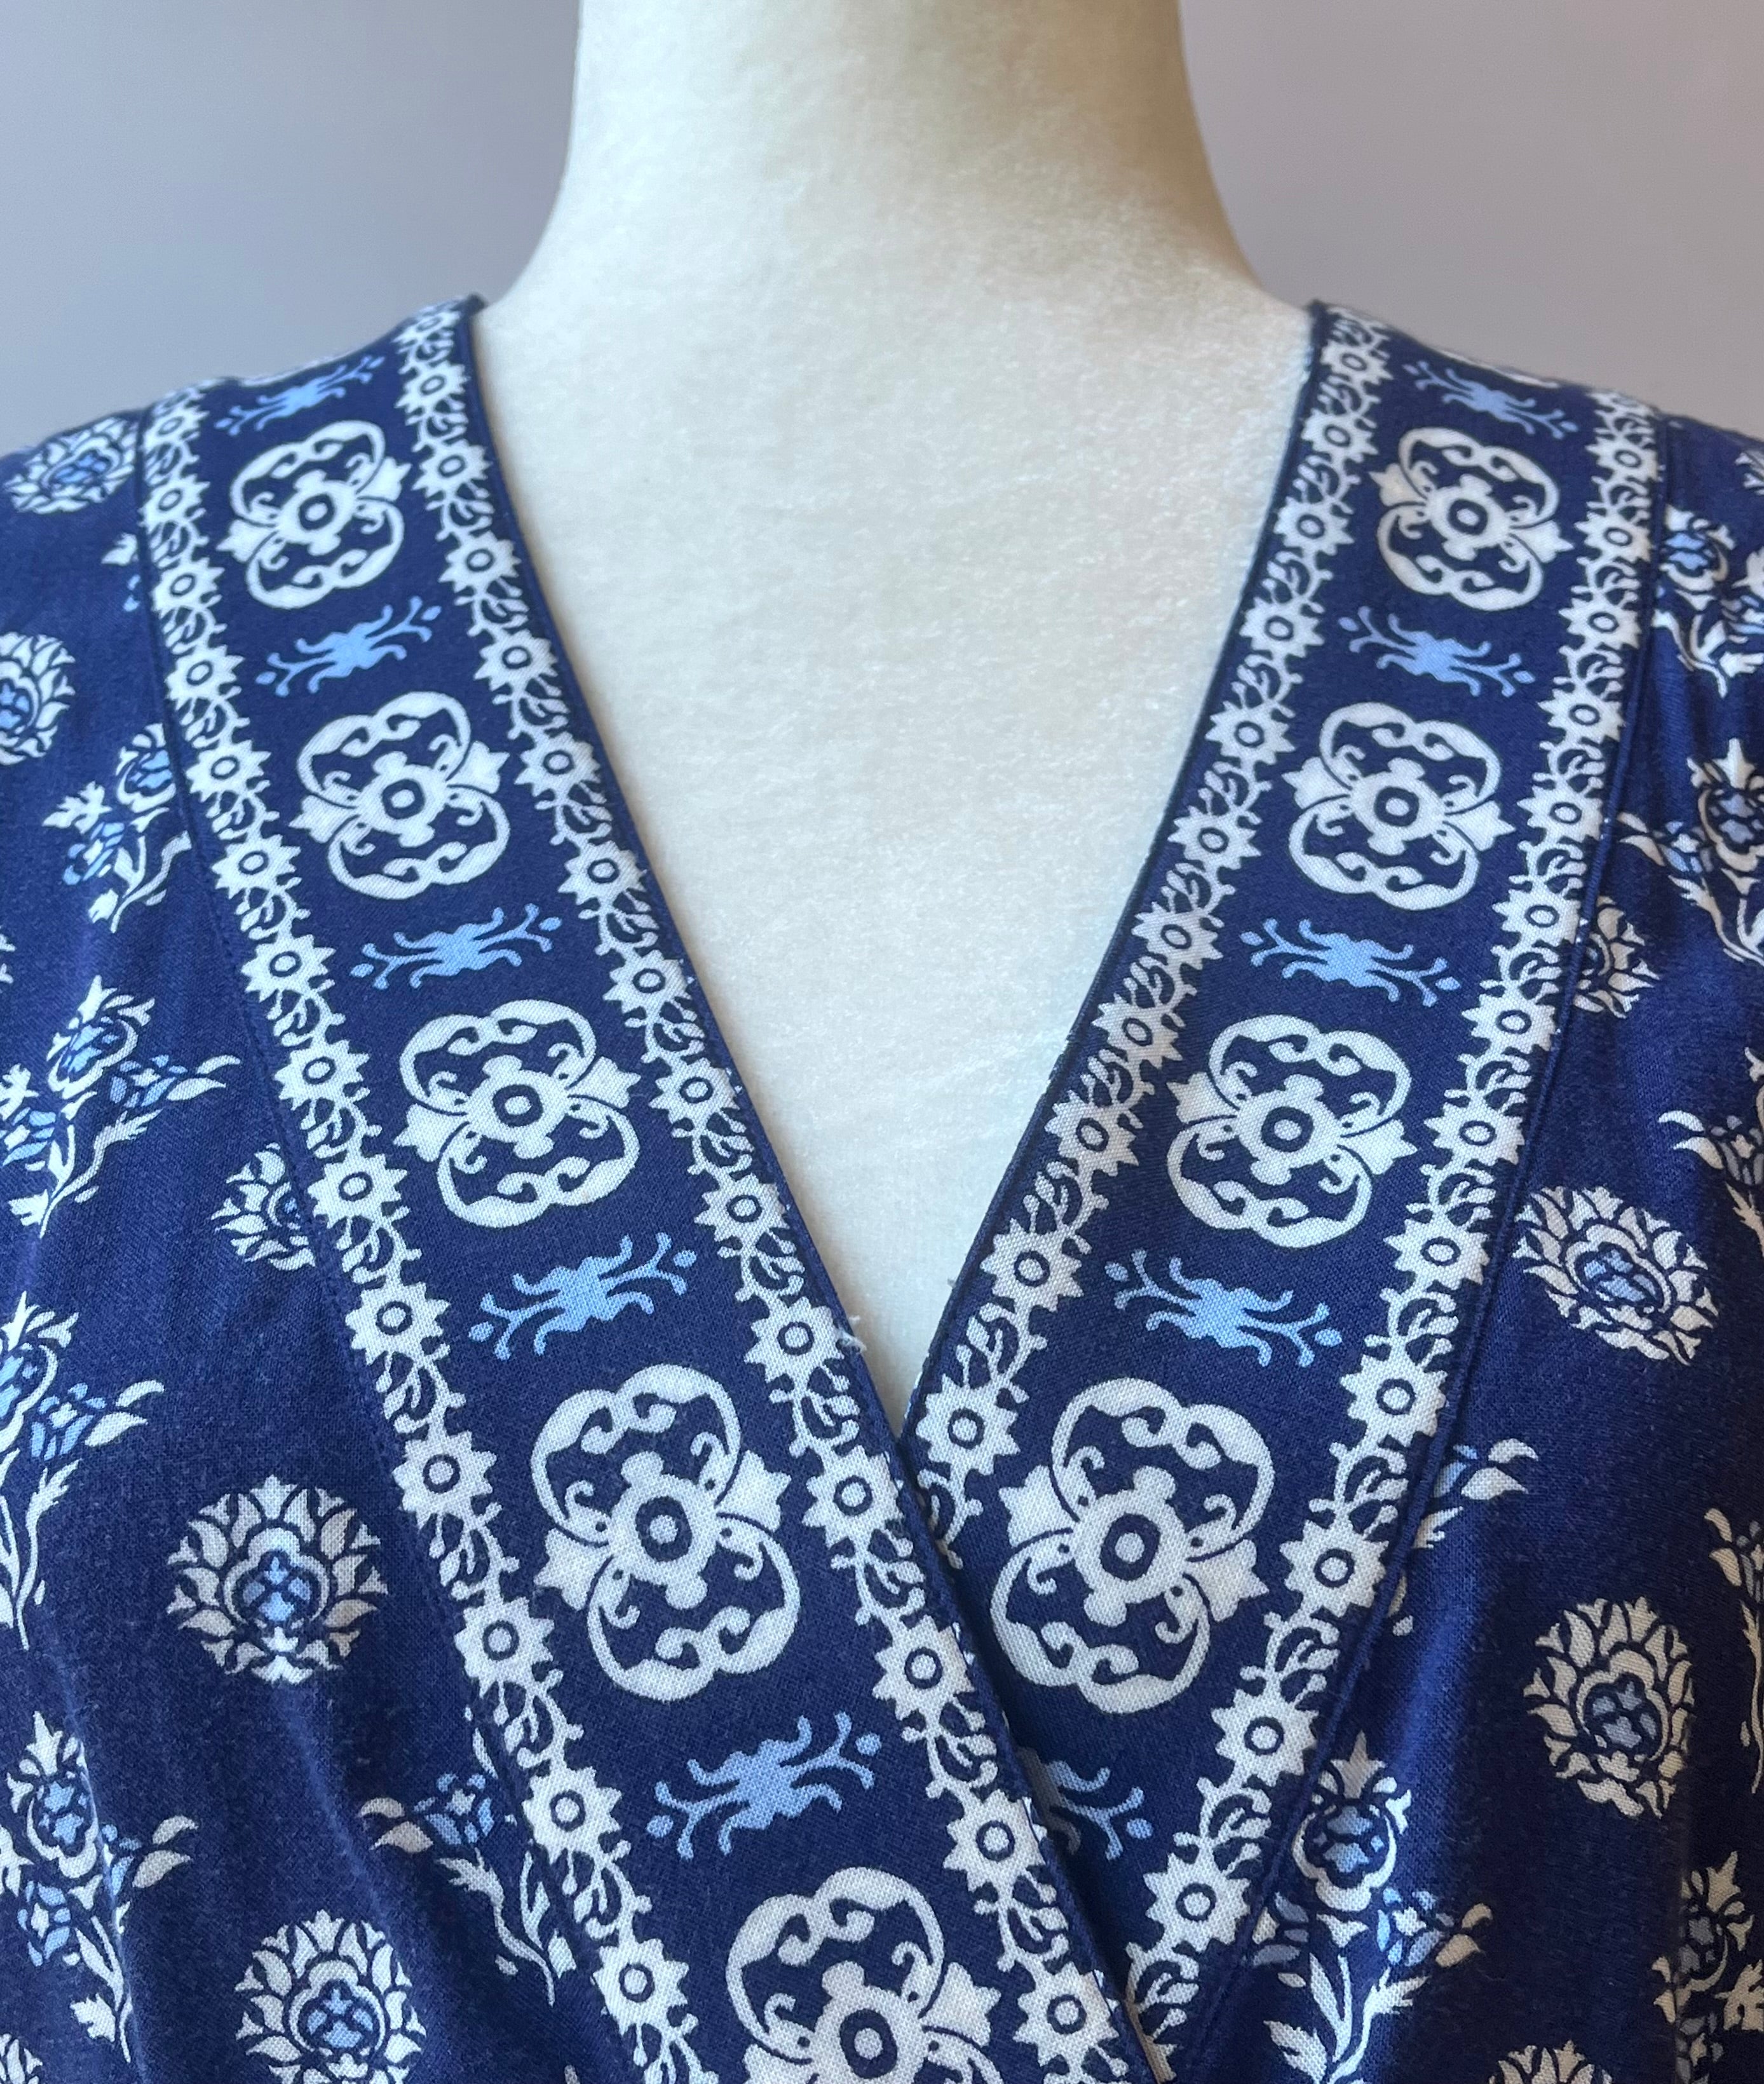 Garnet Hill Blue/White Floral Print Maxi Dress, Size: 6